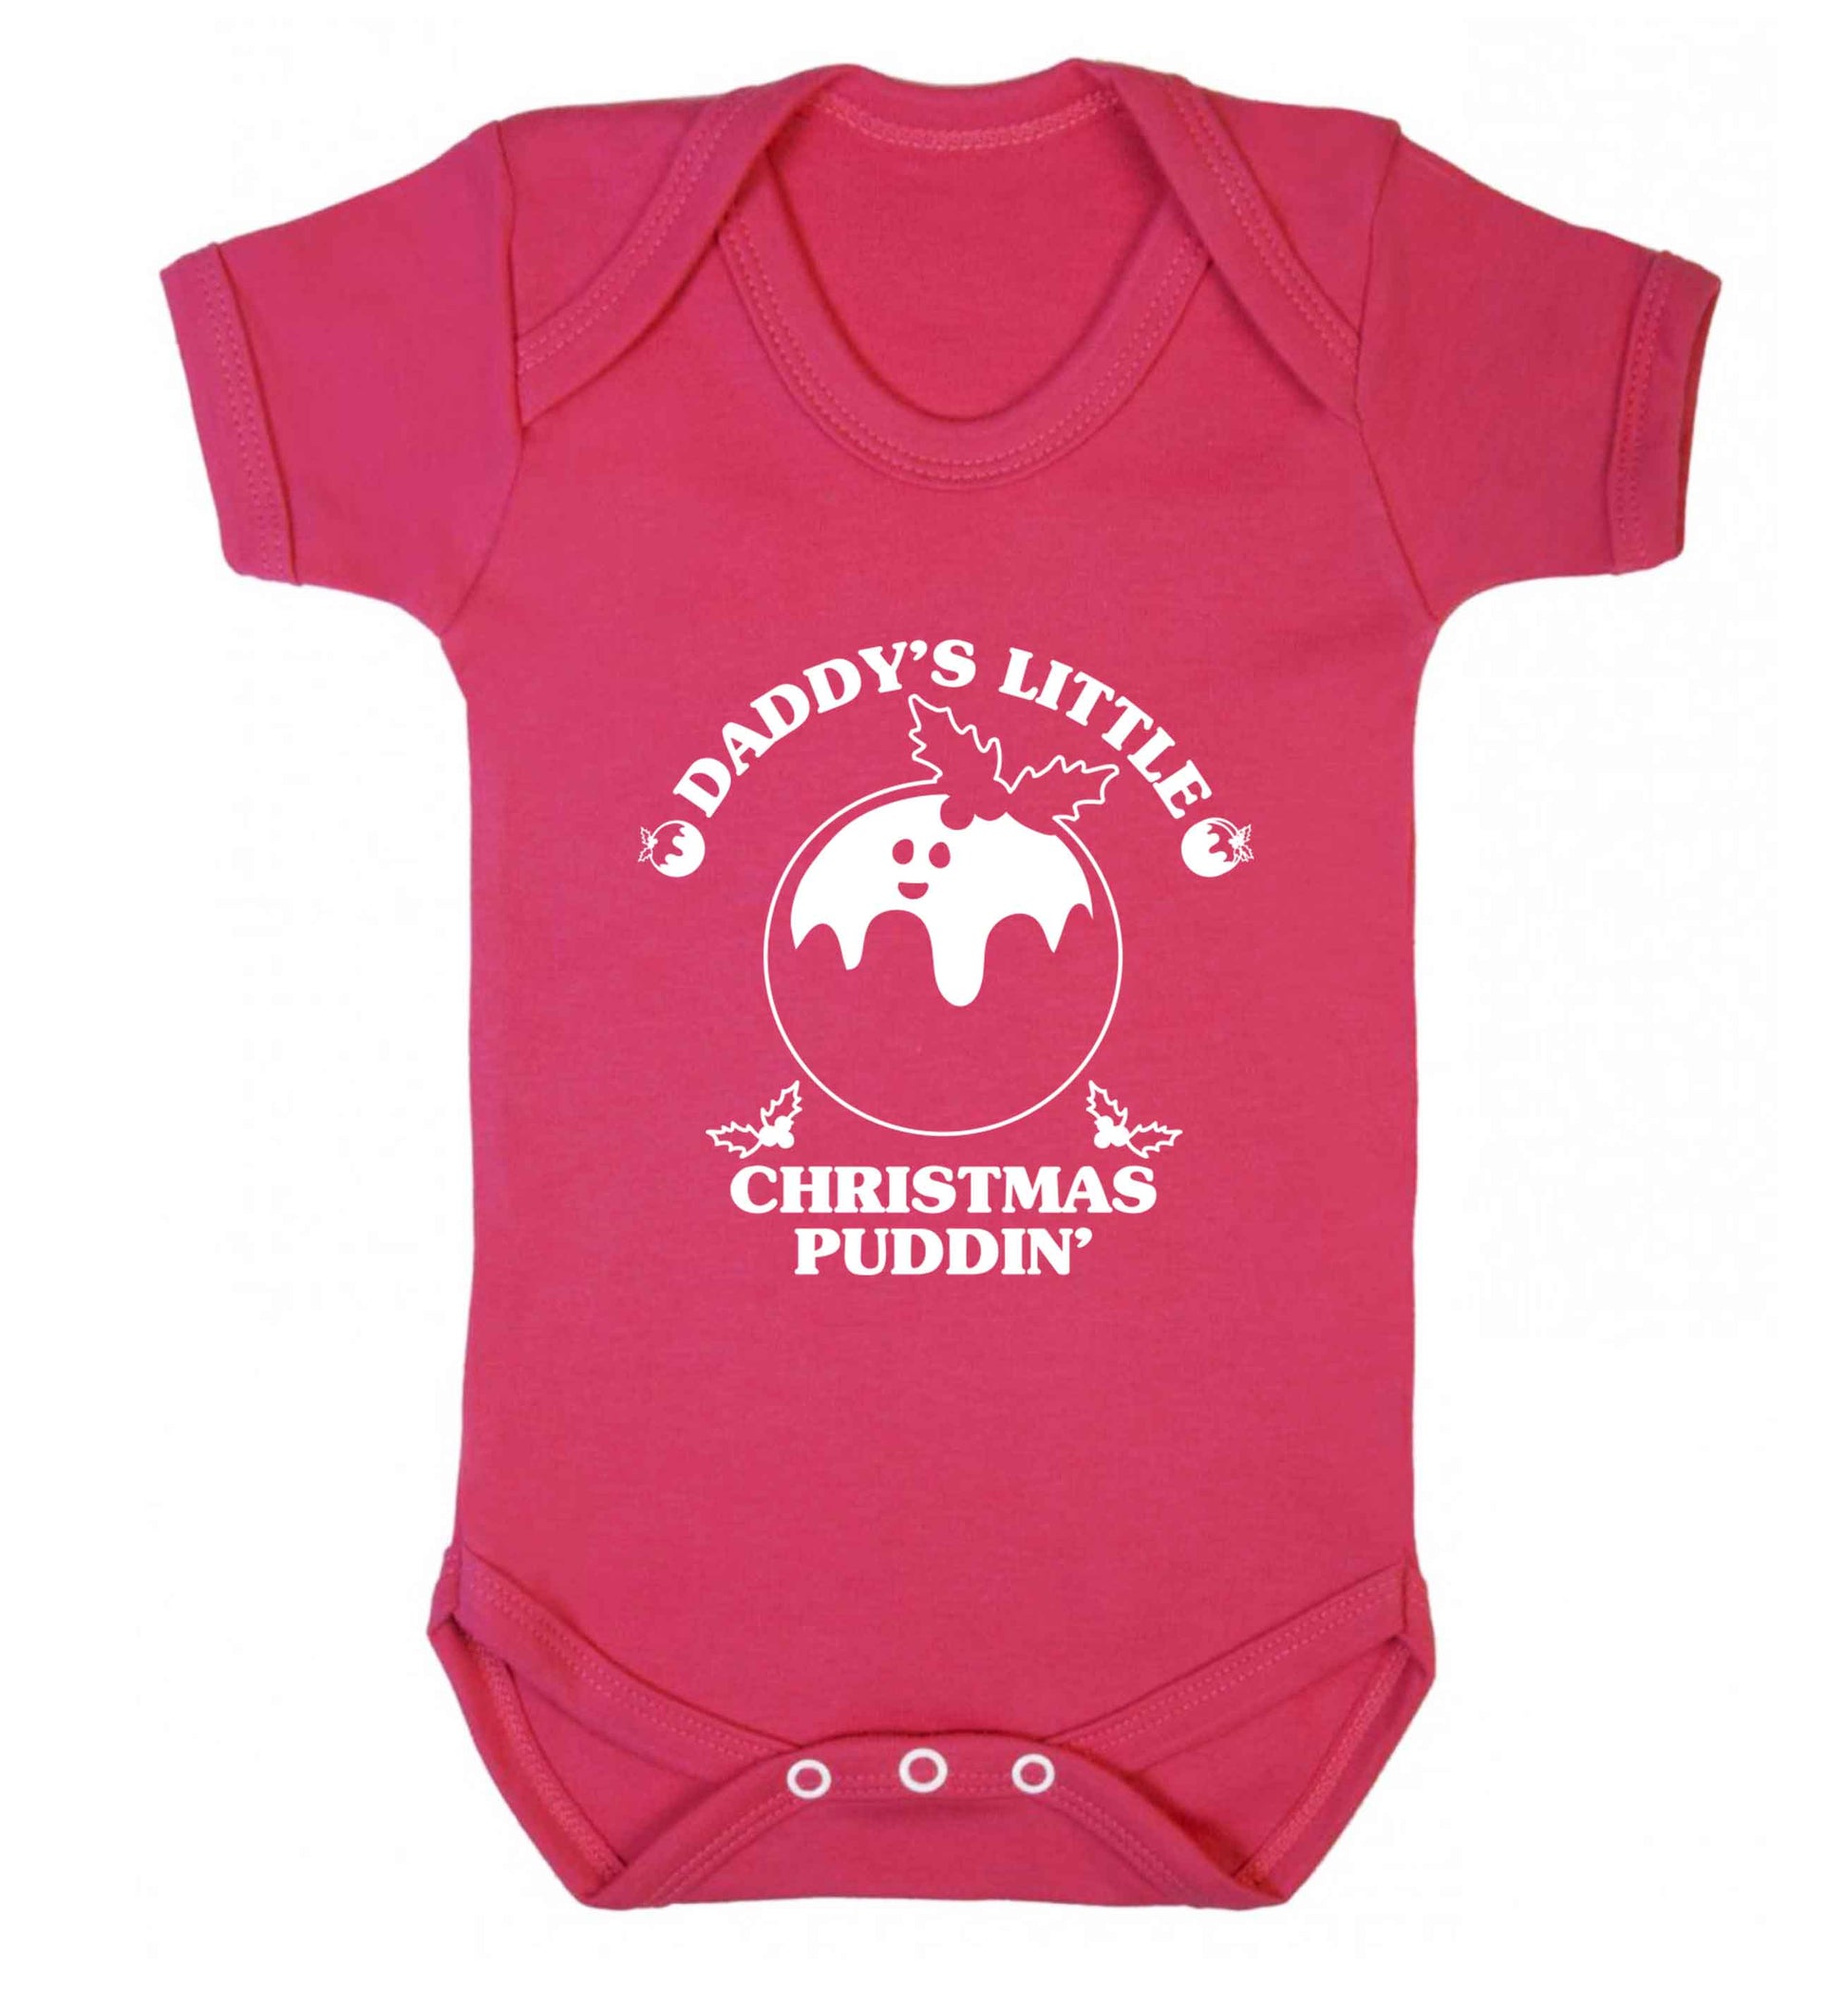 Daddy's little Christmas puddin' Baby Vest dark pink 18-24 months